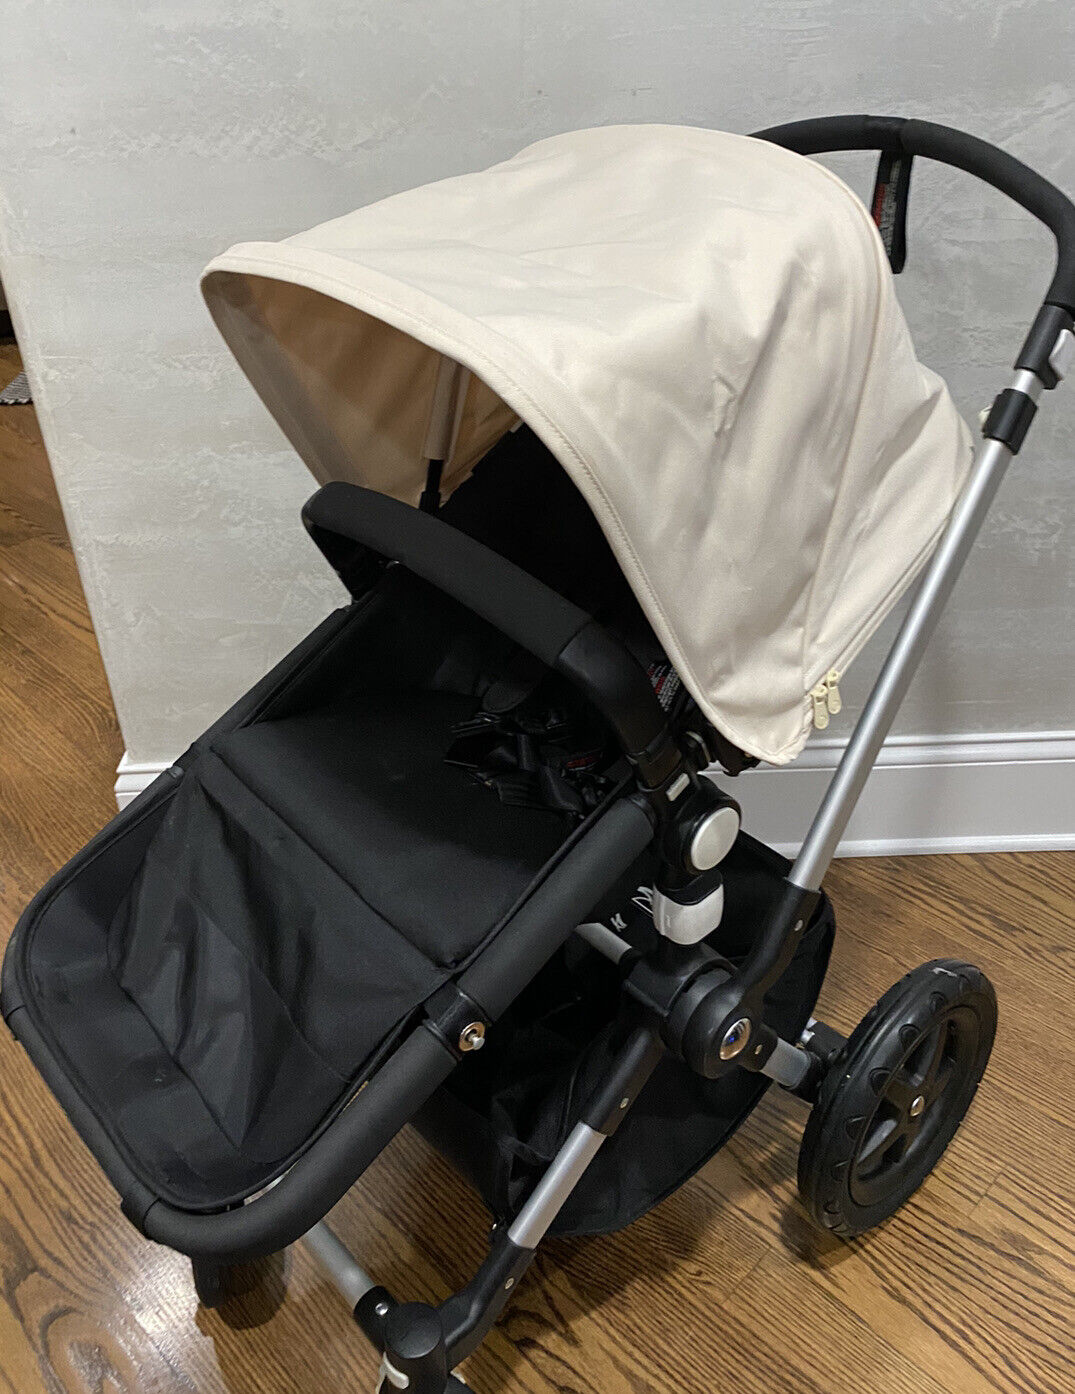 Bugaboo Cameleon C3 Baby Stroller Beige Color Witn Extra Accesories